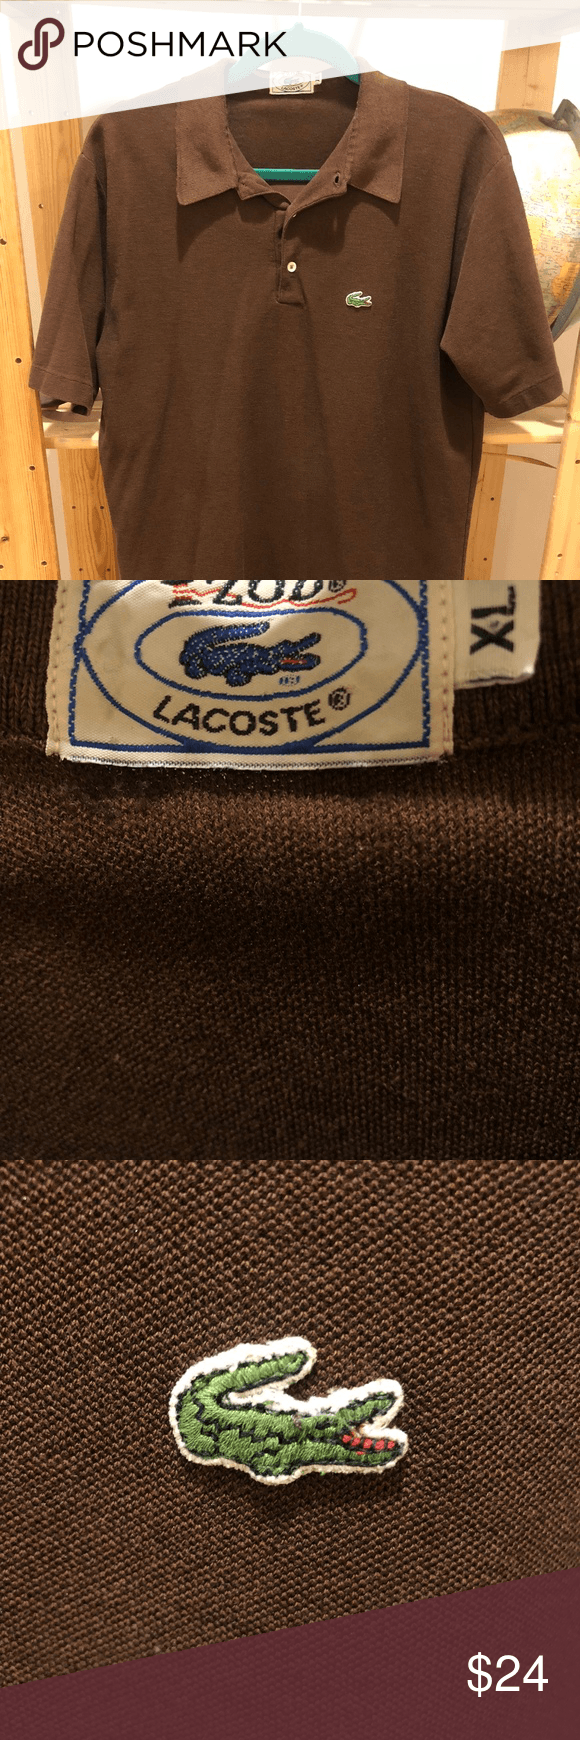 Old Izod Logo - Vintage Izod Lacoste Polo Shirt Brown Vintage Izod Lacoste Mens Polo